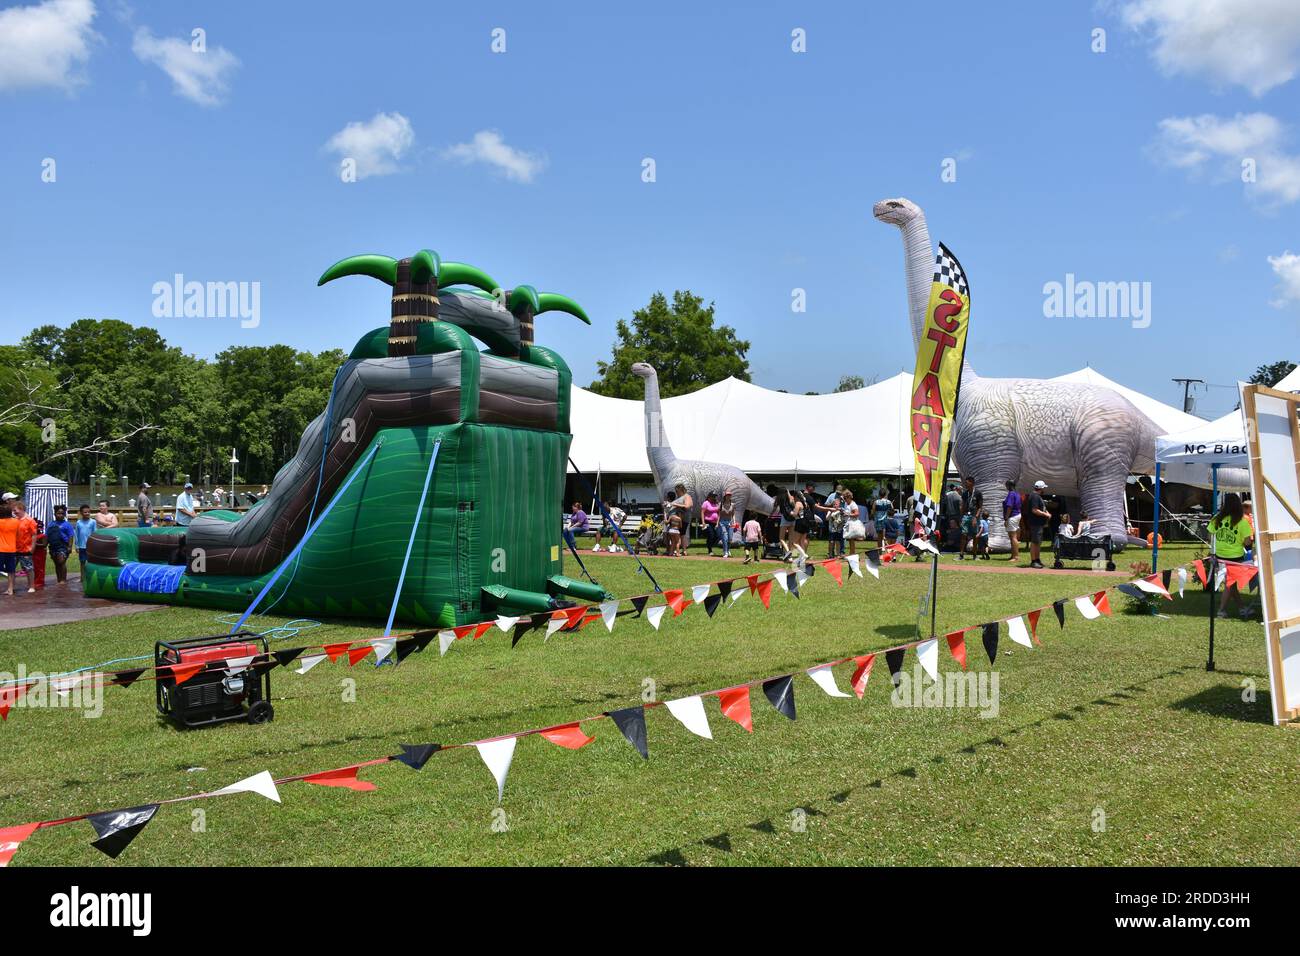 The Black Bear Festival held in Plymouth, North Carolina. Stock Photo